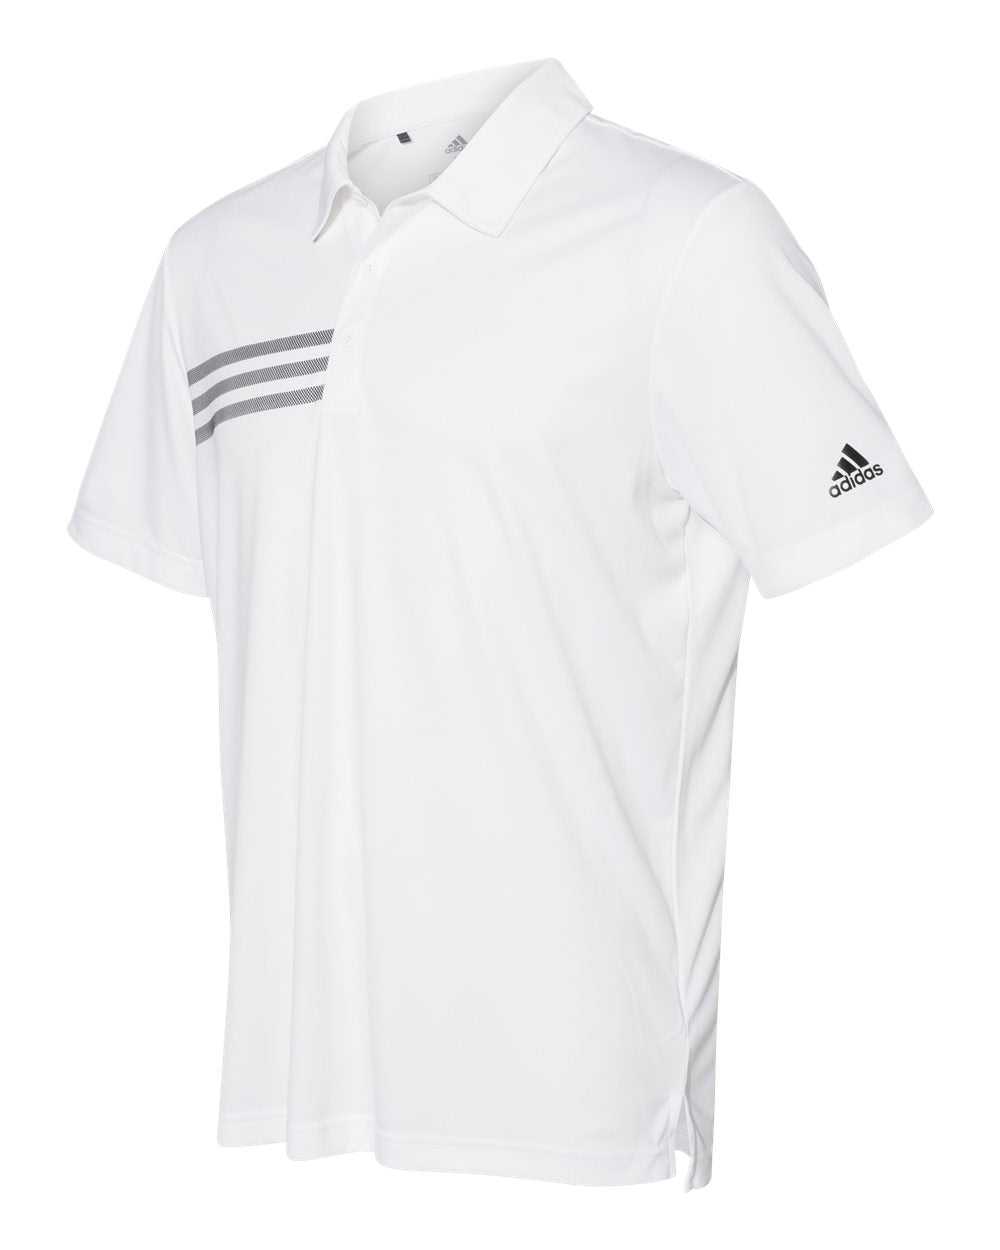 Adidas A324 3-Stripes Chest Sport Shirt - White Black - HIT a Double